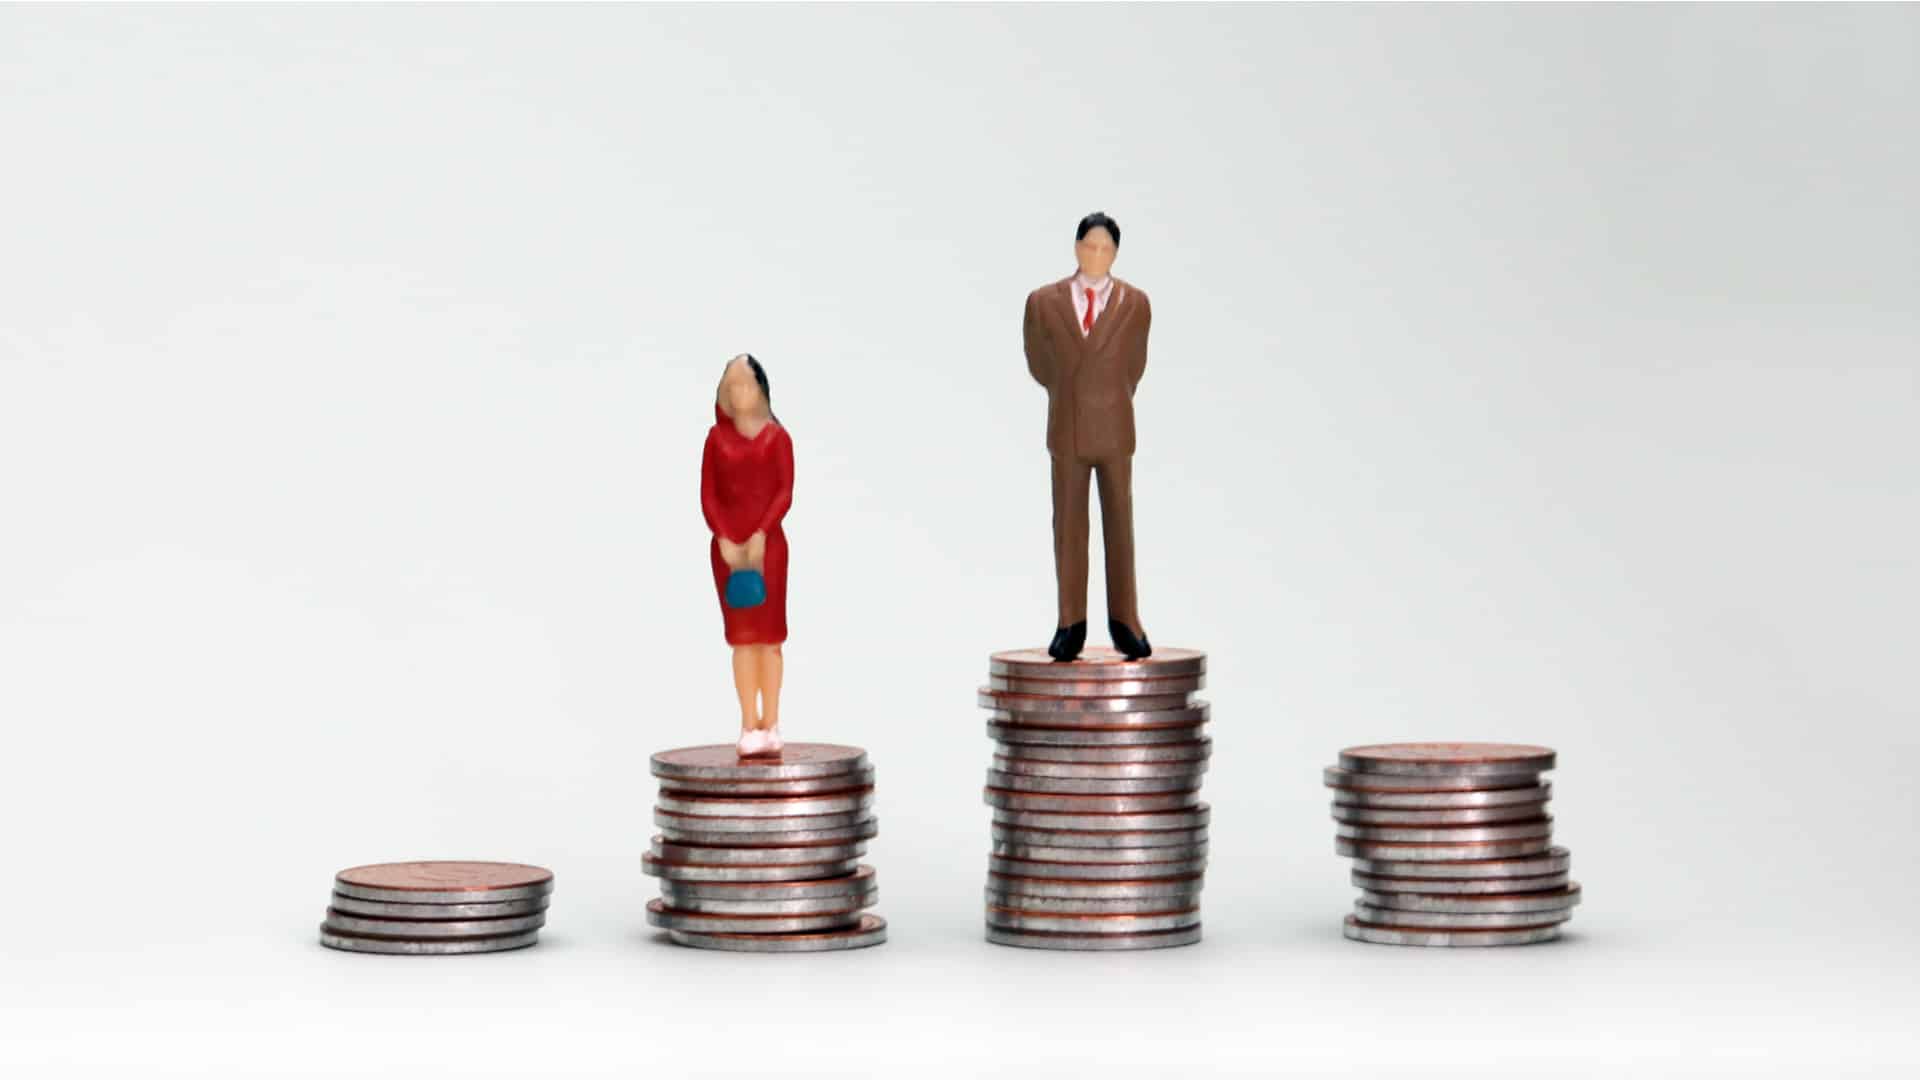 The meritocracy myth vs. the real gender pay gap